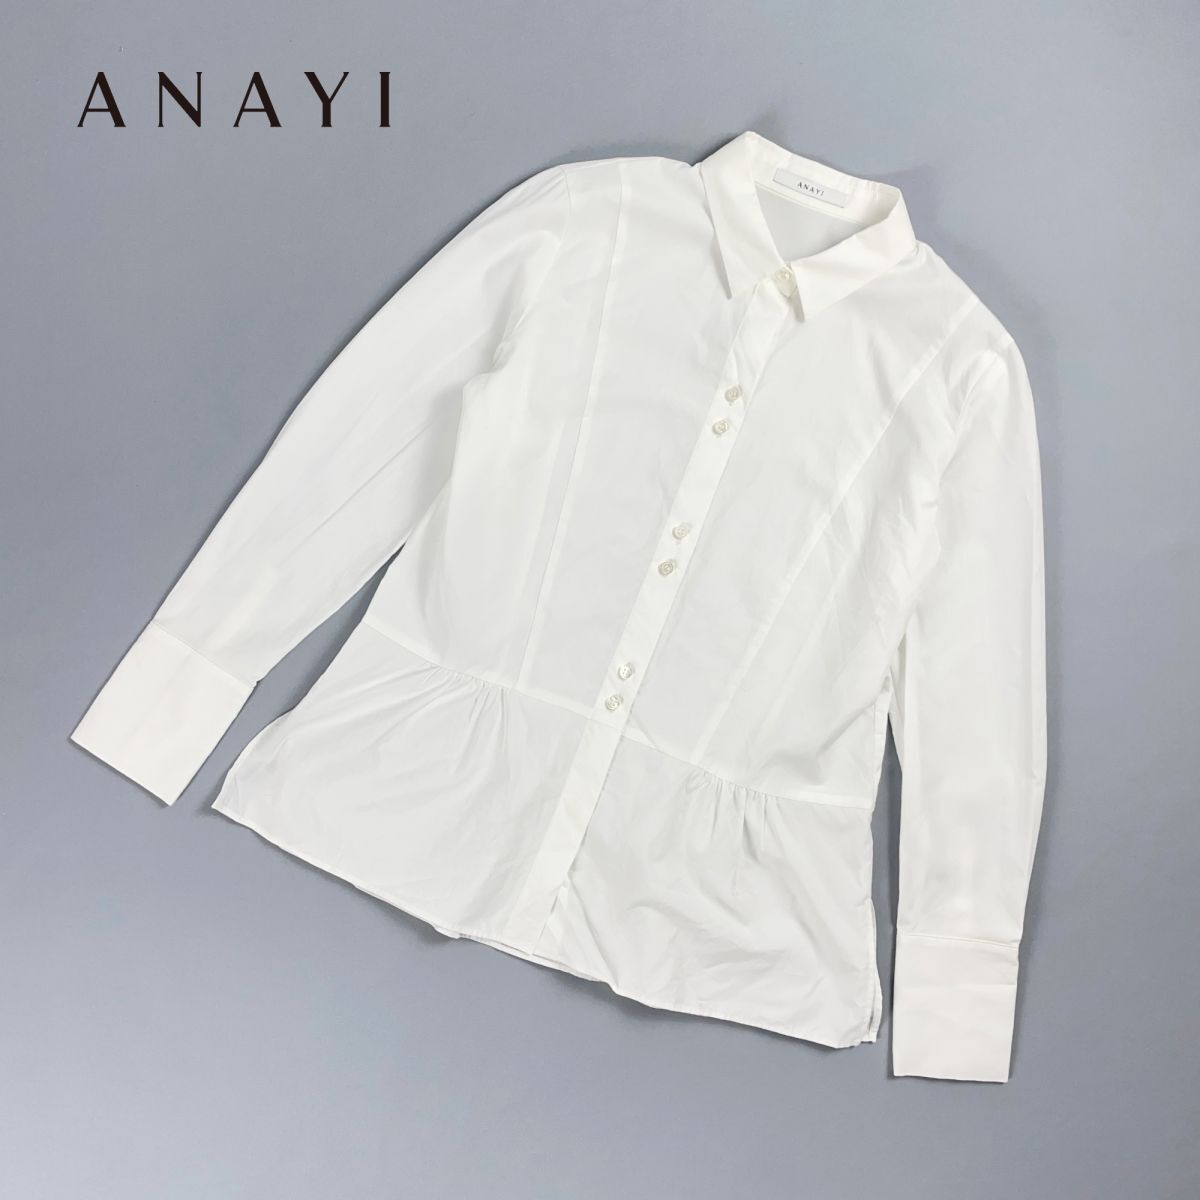  beautiful goods ANAYI Anayi design button hem frill collar attaching long sleeve blouse shirt tops lady's white white size 38*OC382